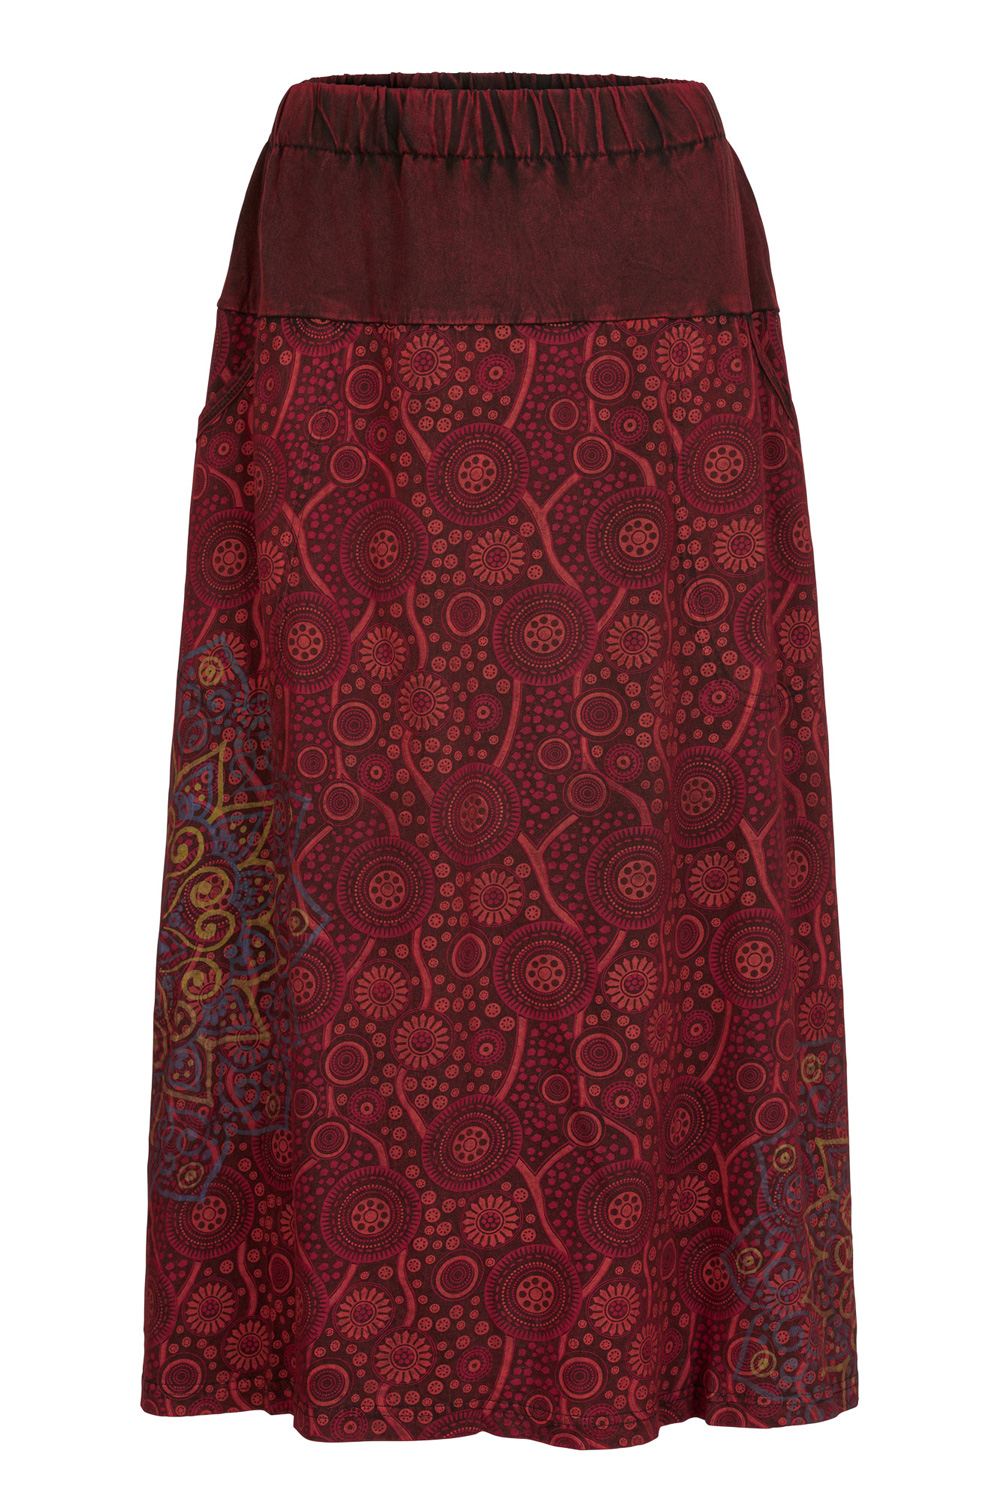 Wicked Dragon Clothing - Mandala print long skirt with pockets